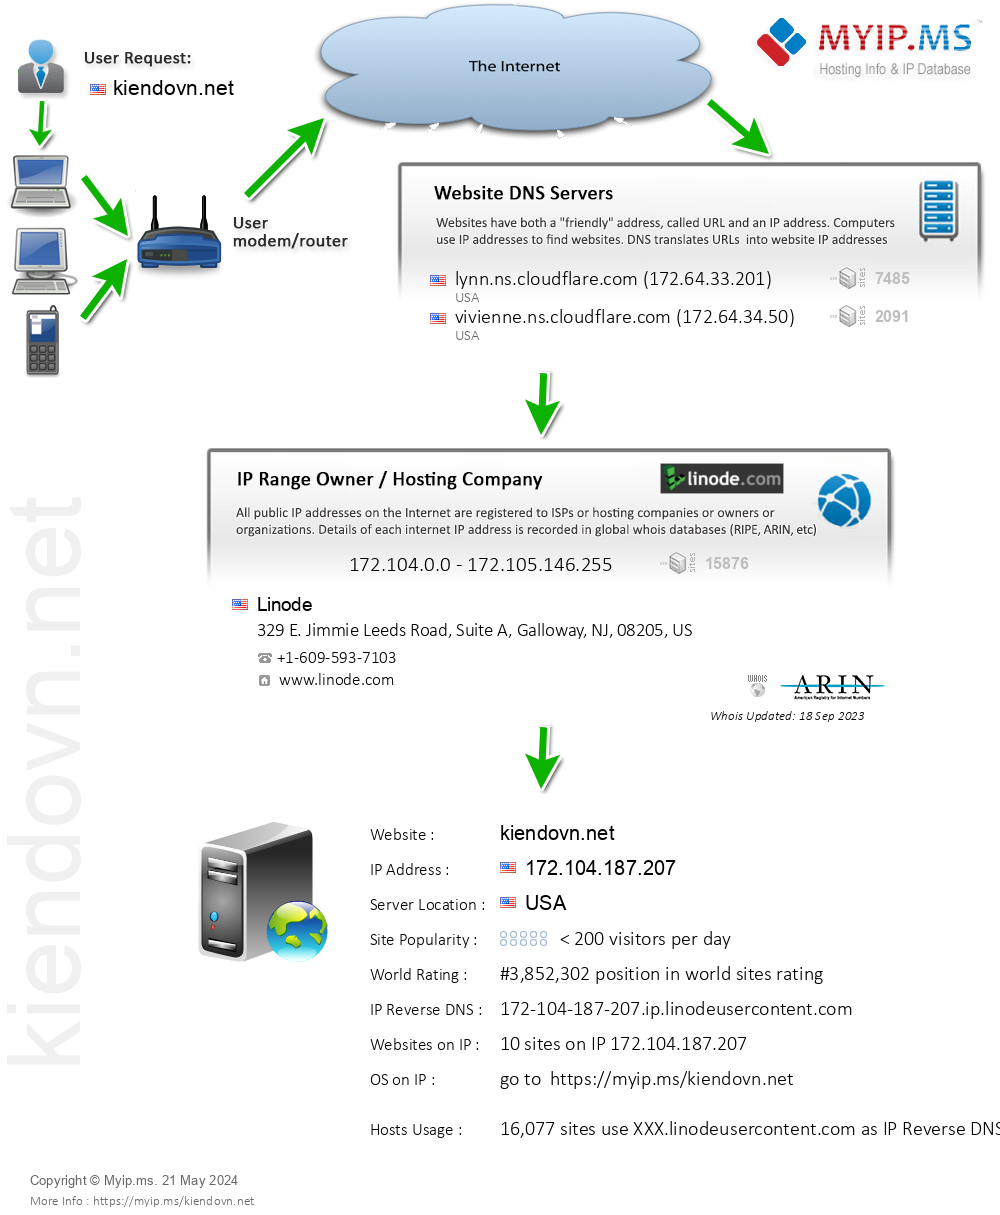 Kiendovn.net - Website Hosting Visual IP Diagram